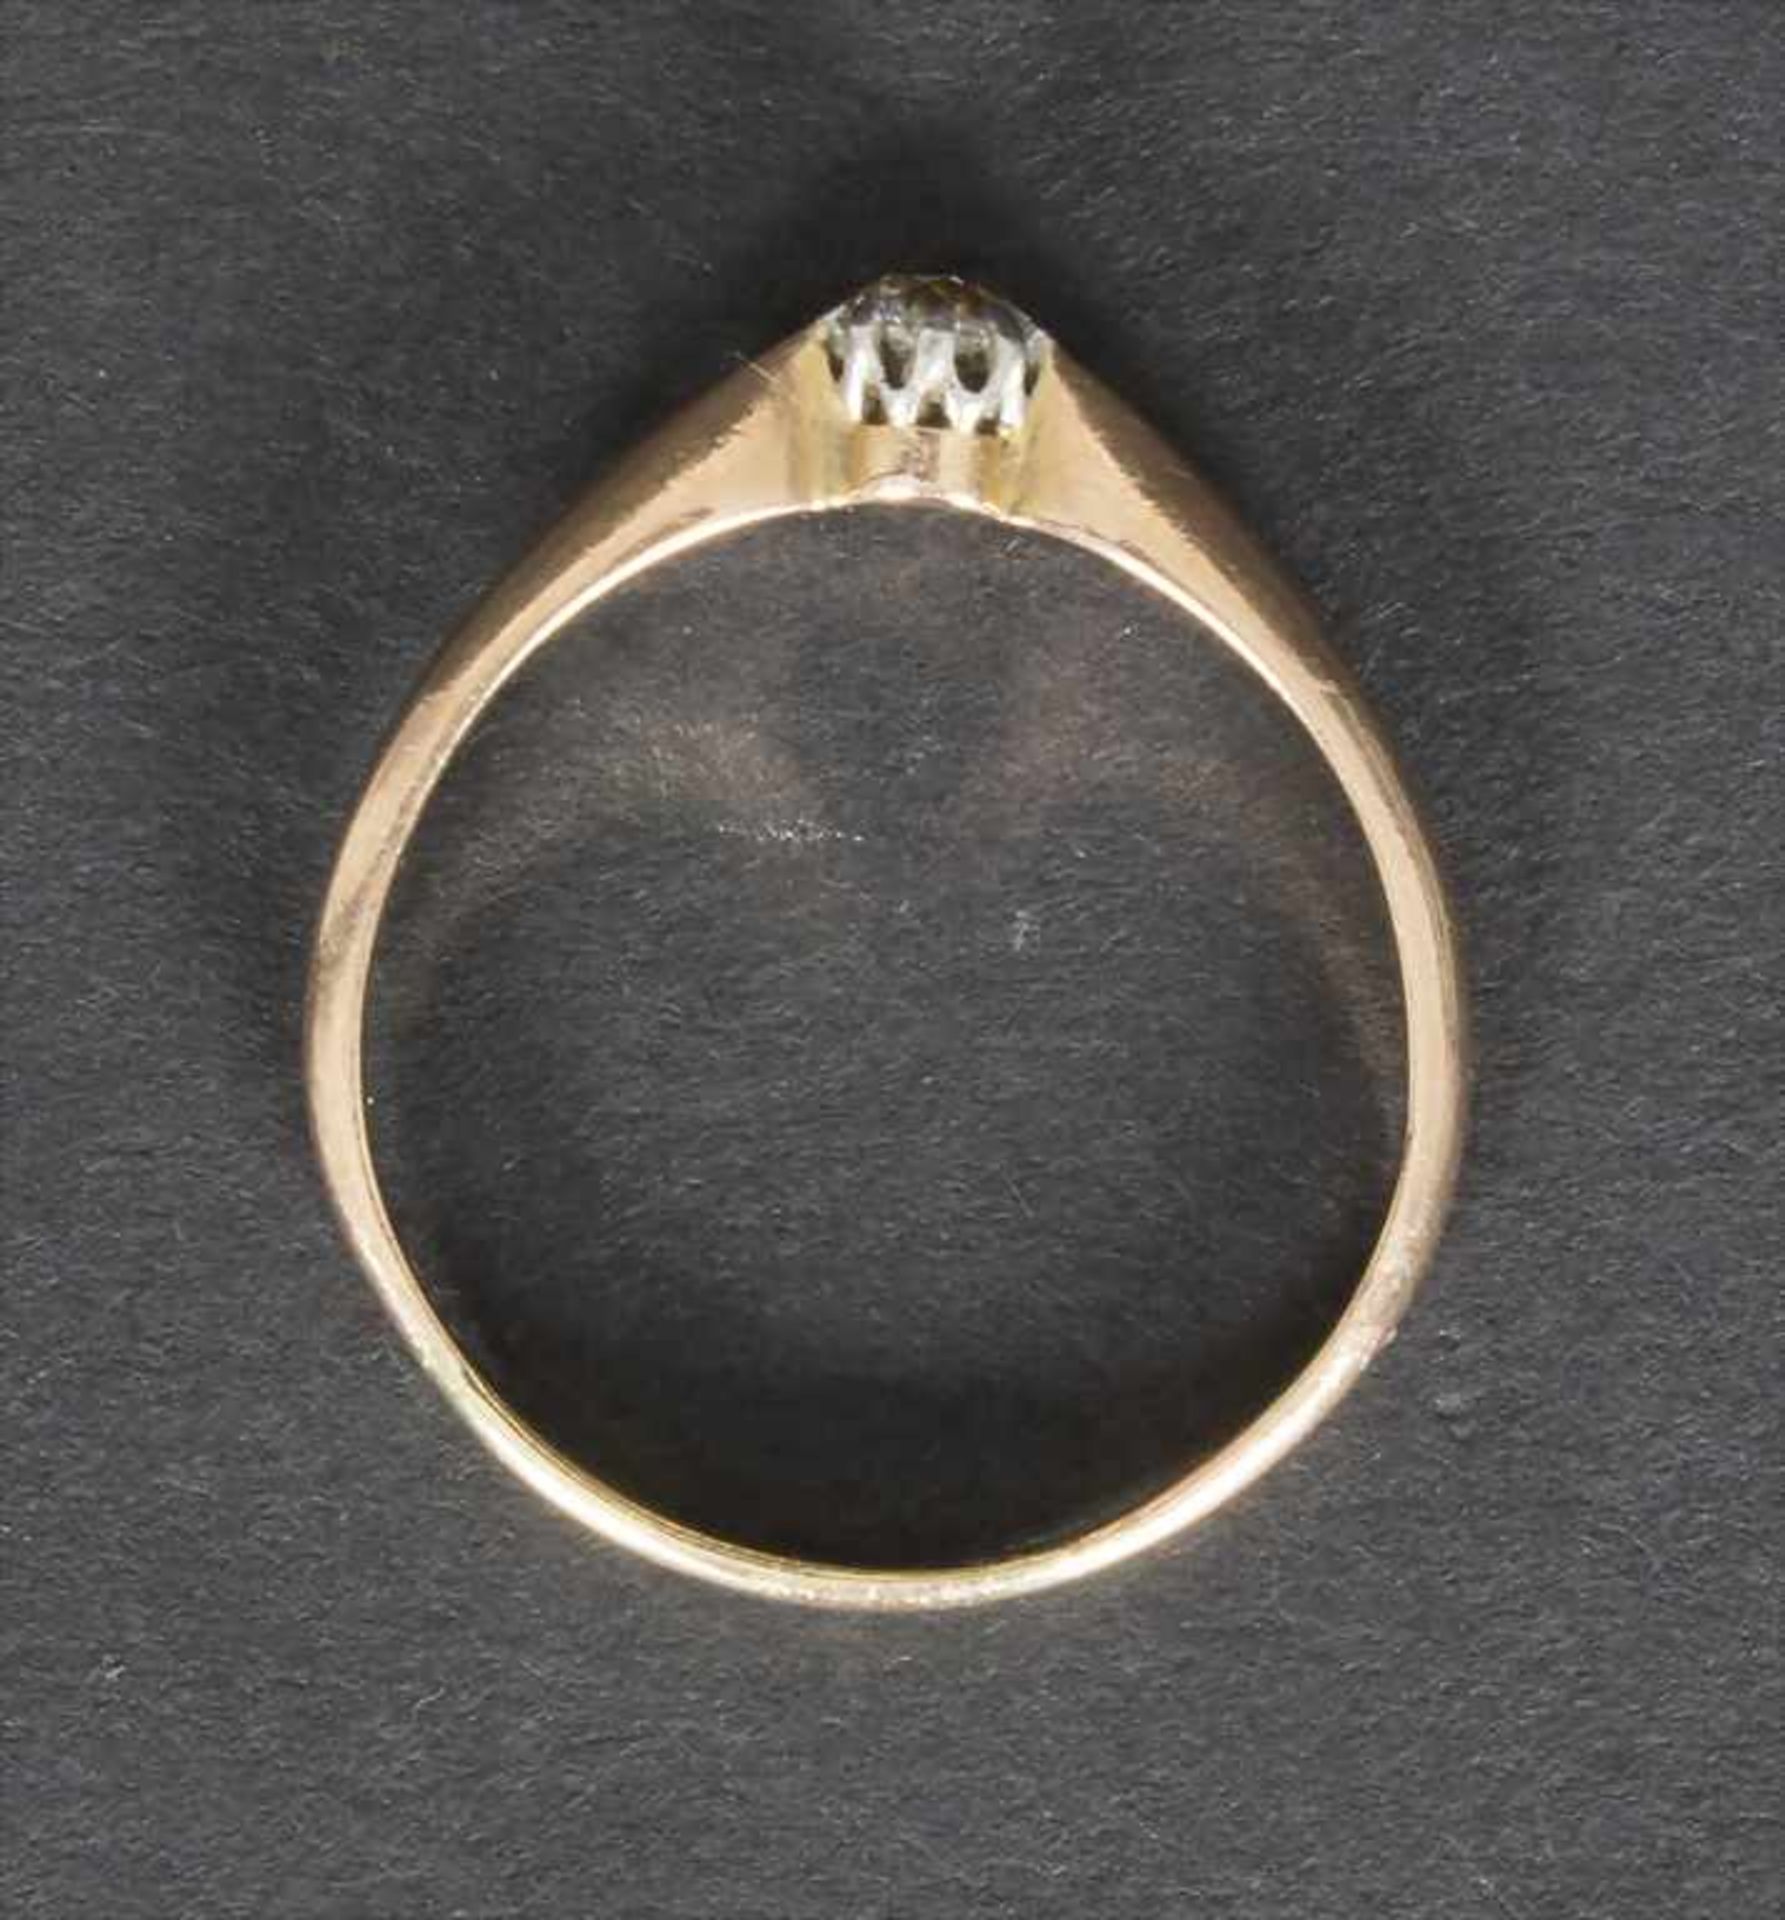 Damenring mit Diamant / A ladies ring with diamondMaterial: GG 585/000, Diamant,Ringgröße: 56, - Image 2 of 2